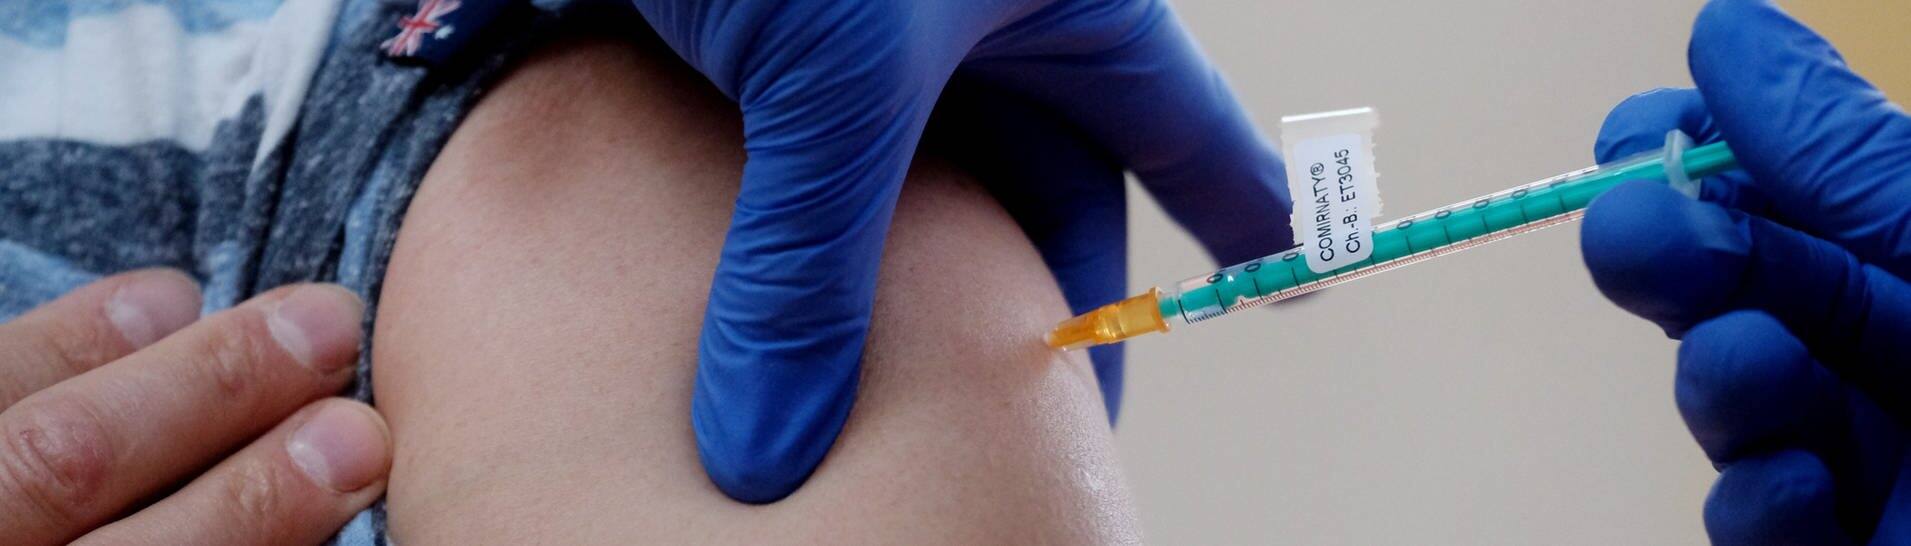 Ein Patient bekommt eine Corona-Impfung (Foto: dpa Bildfunk, picture alliance/dpa/dpa-Zentralbild | Sebastian Willnow)